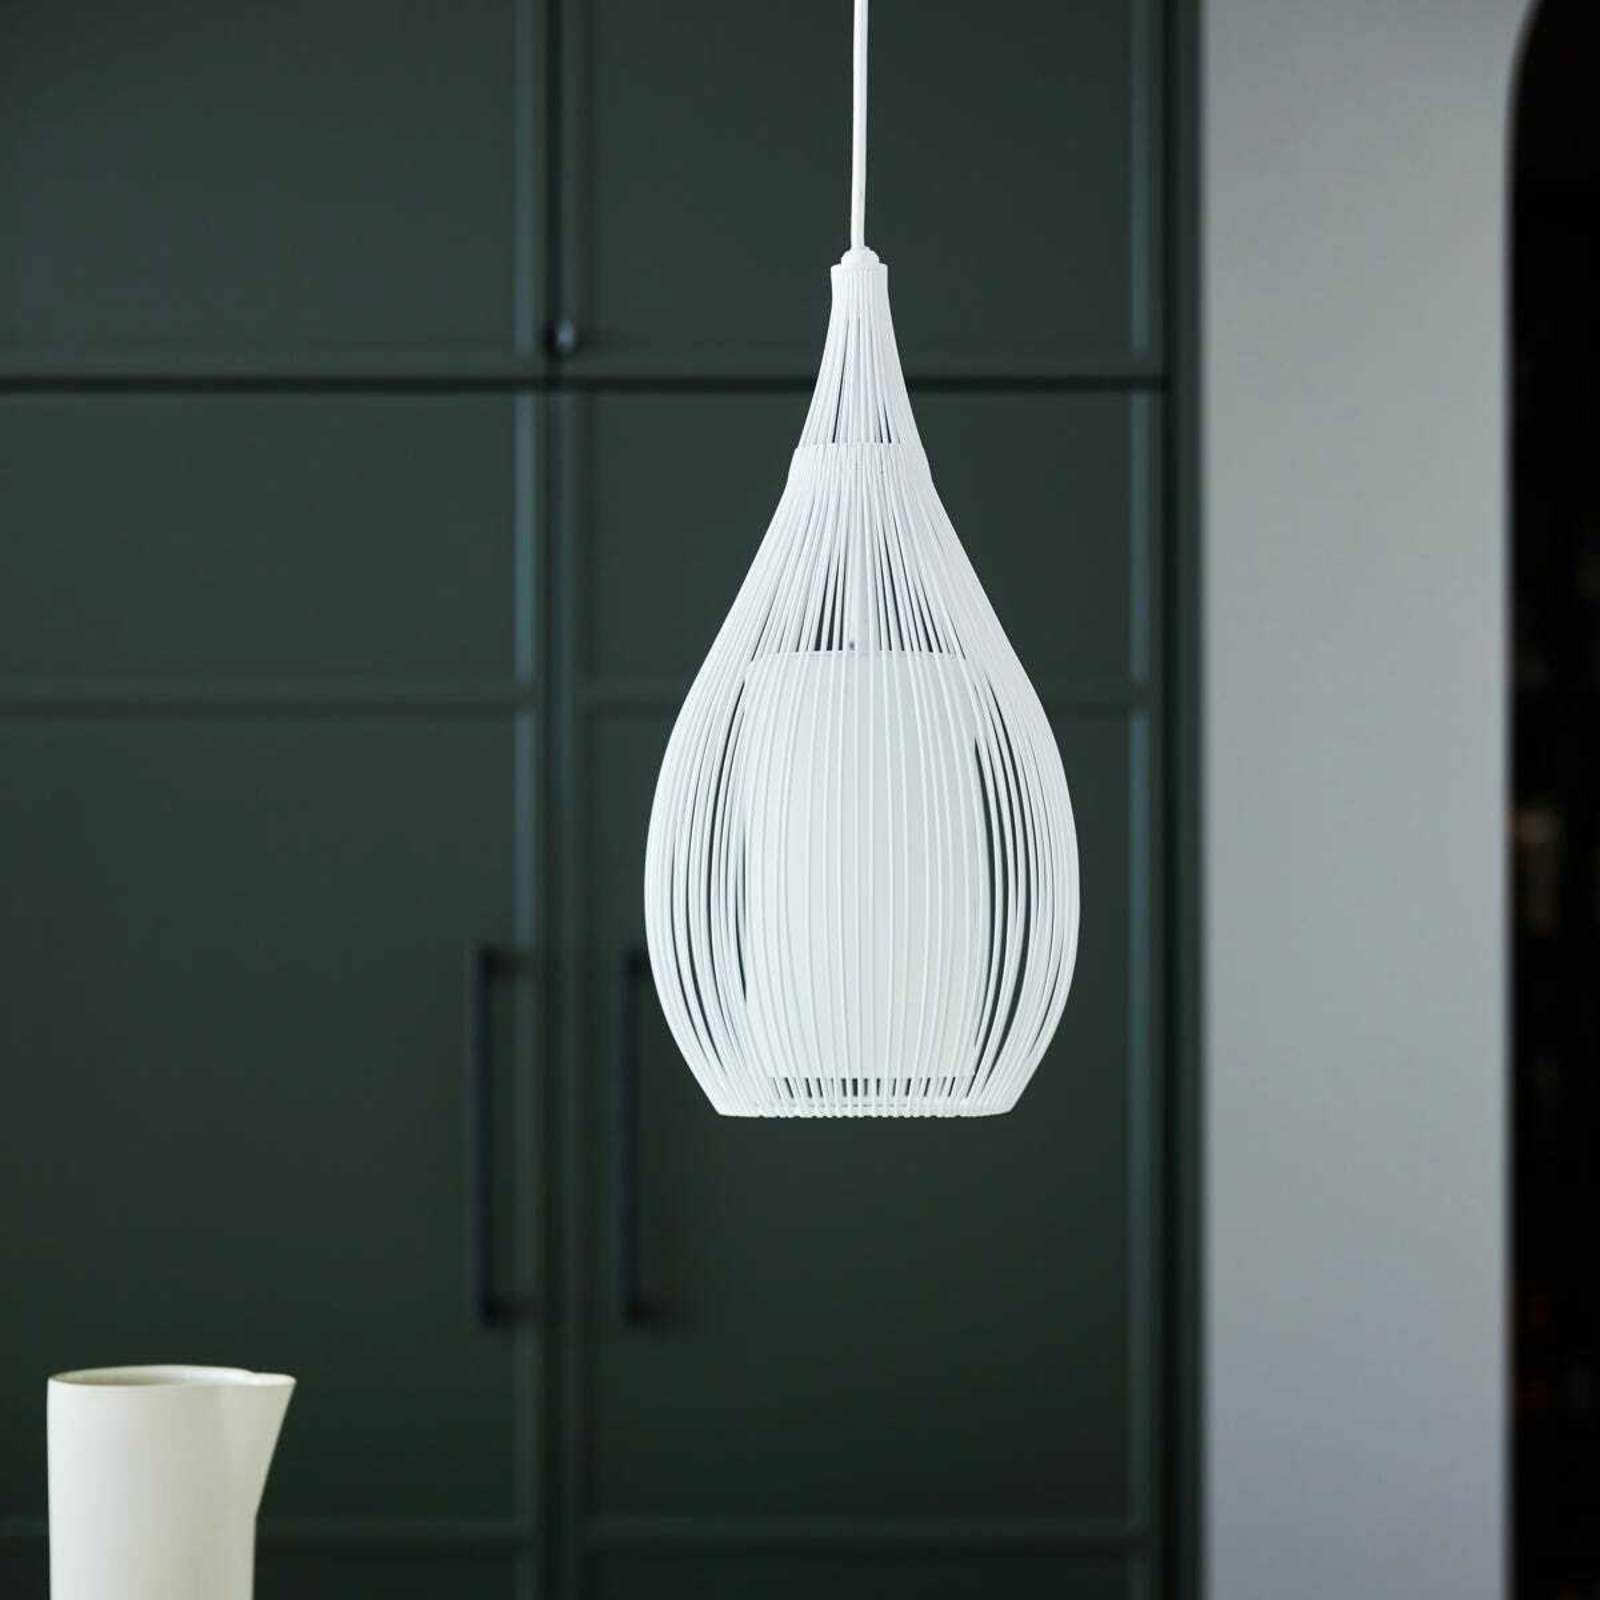 Lampa wisząca Beacon Solis, biała, metal, szkło, Ø 19 cm